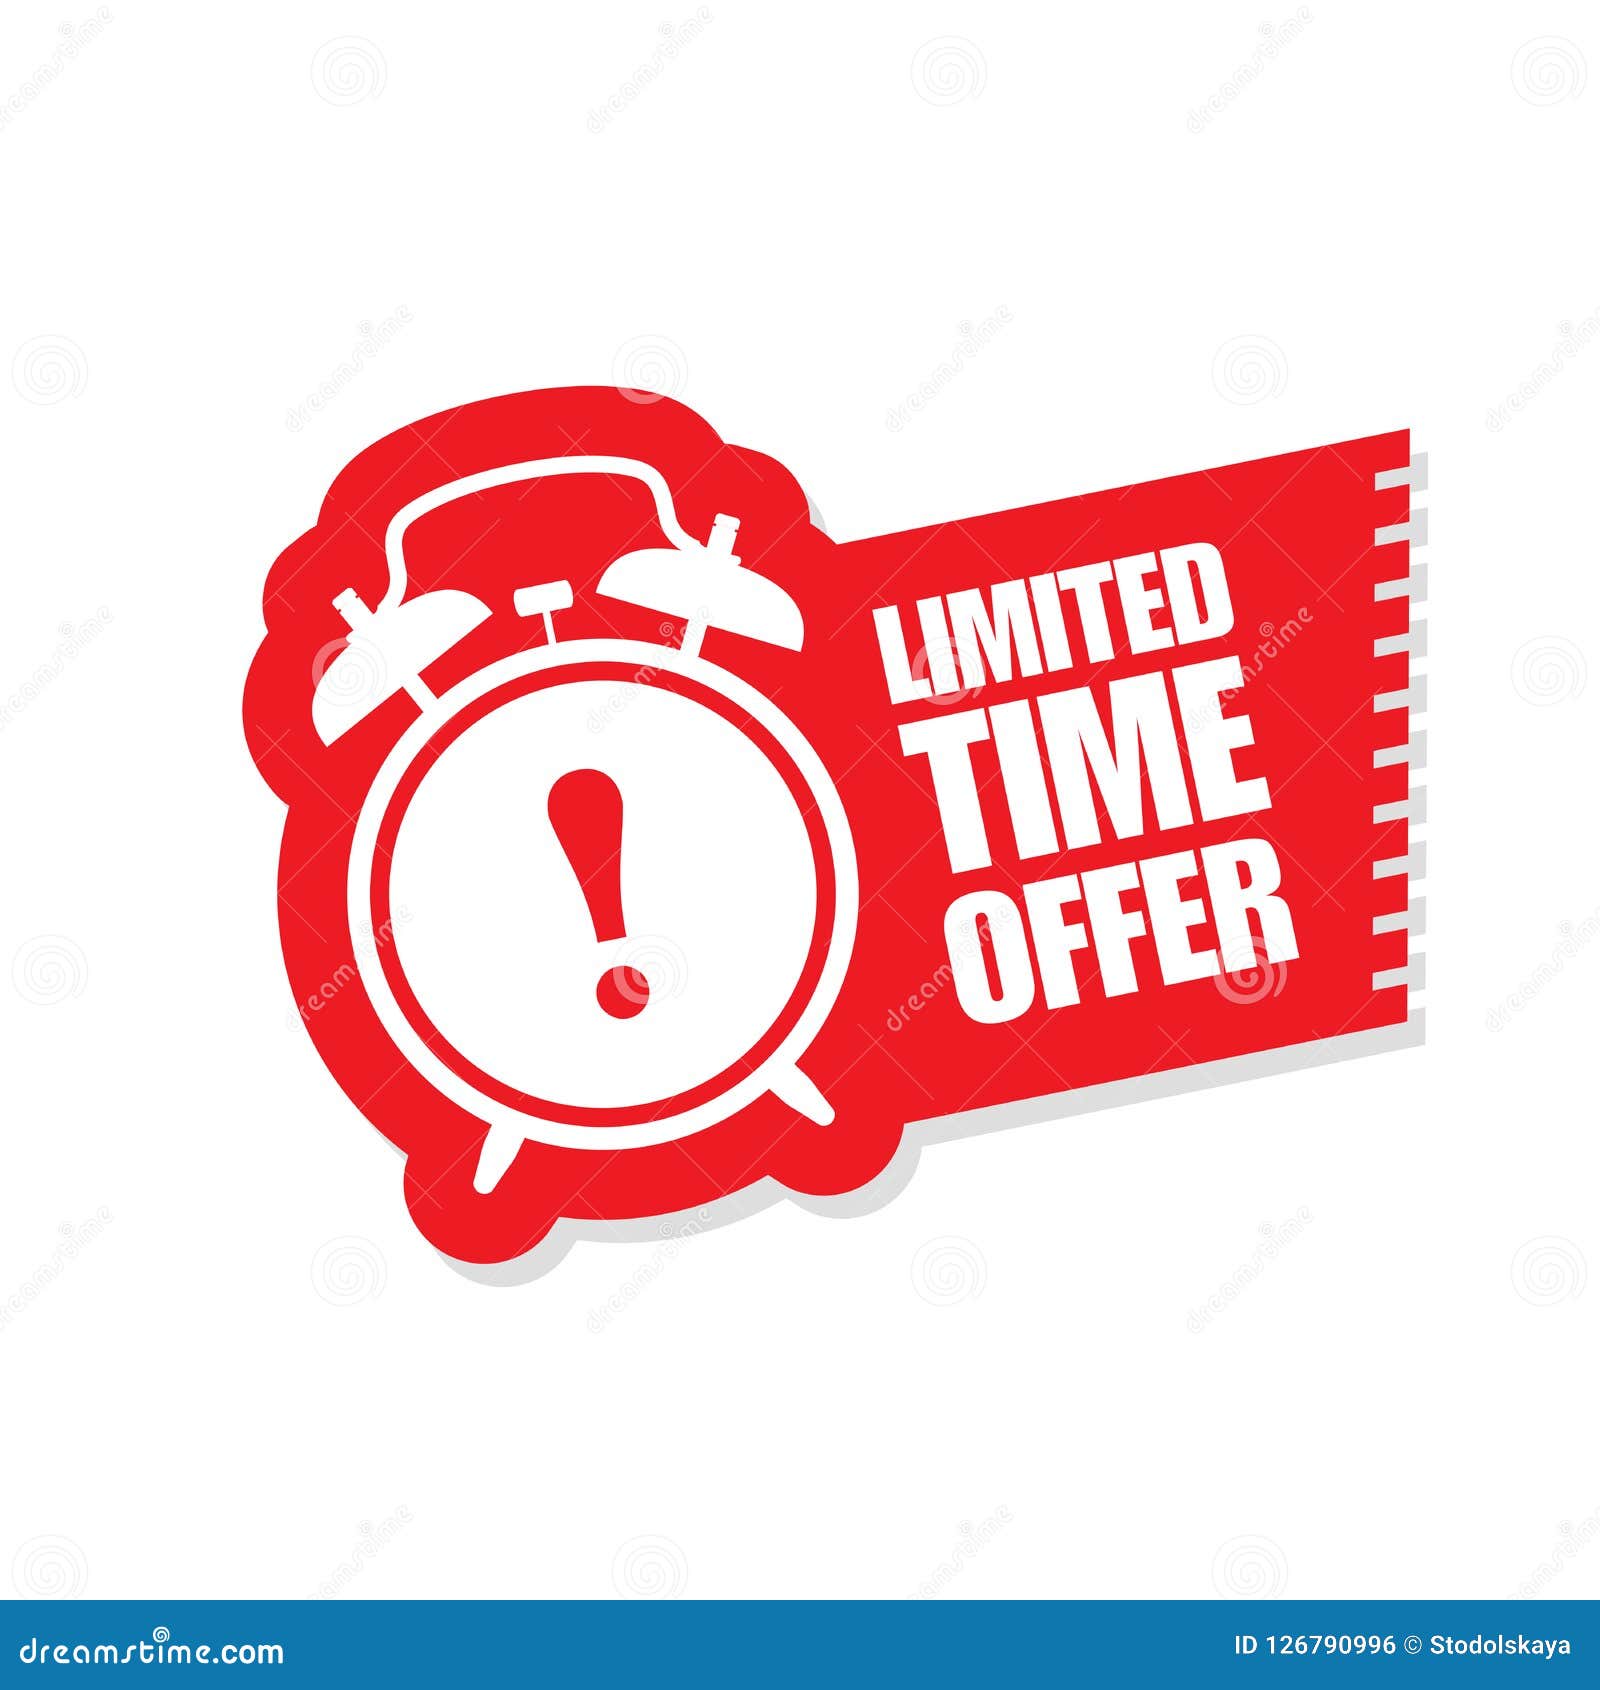 Limit offer. Limited time. Limited time offer. Limited time offer вектор. Стикер предложение.